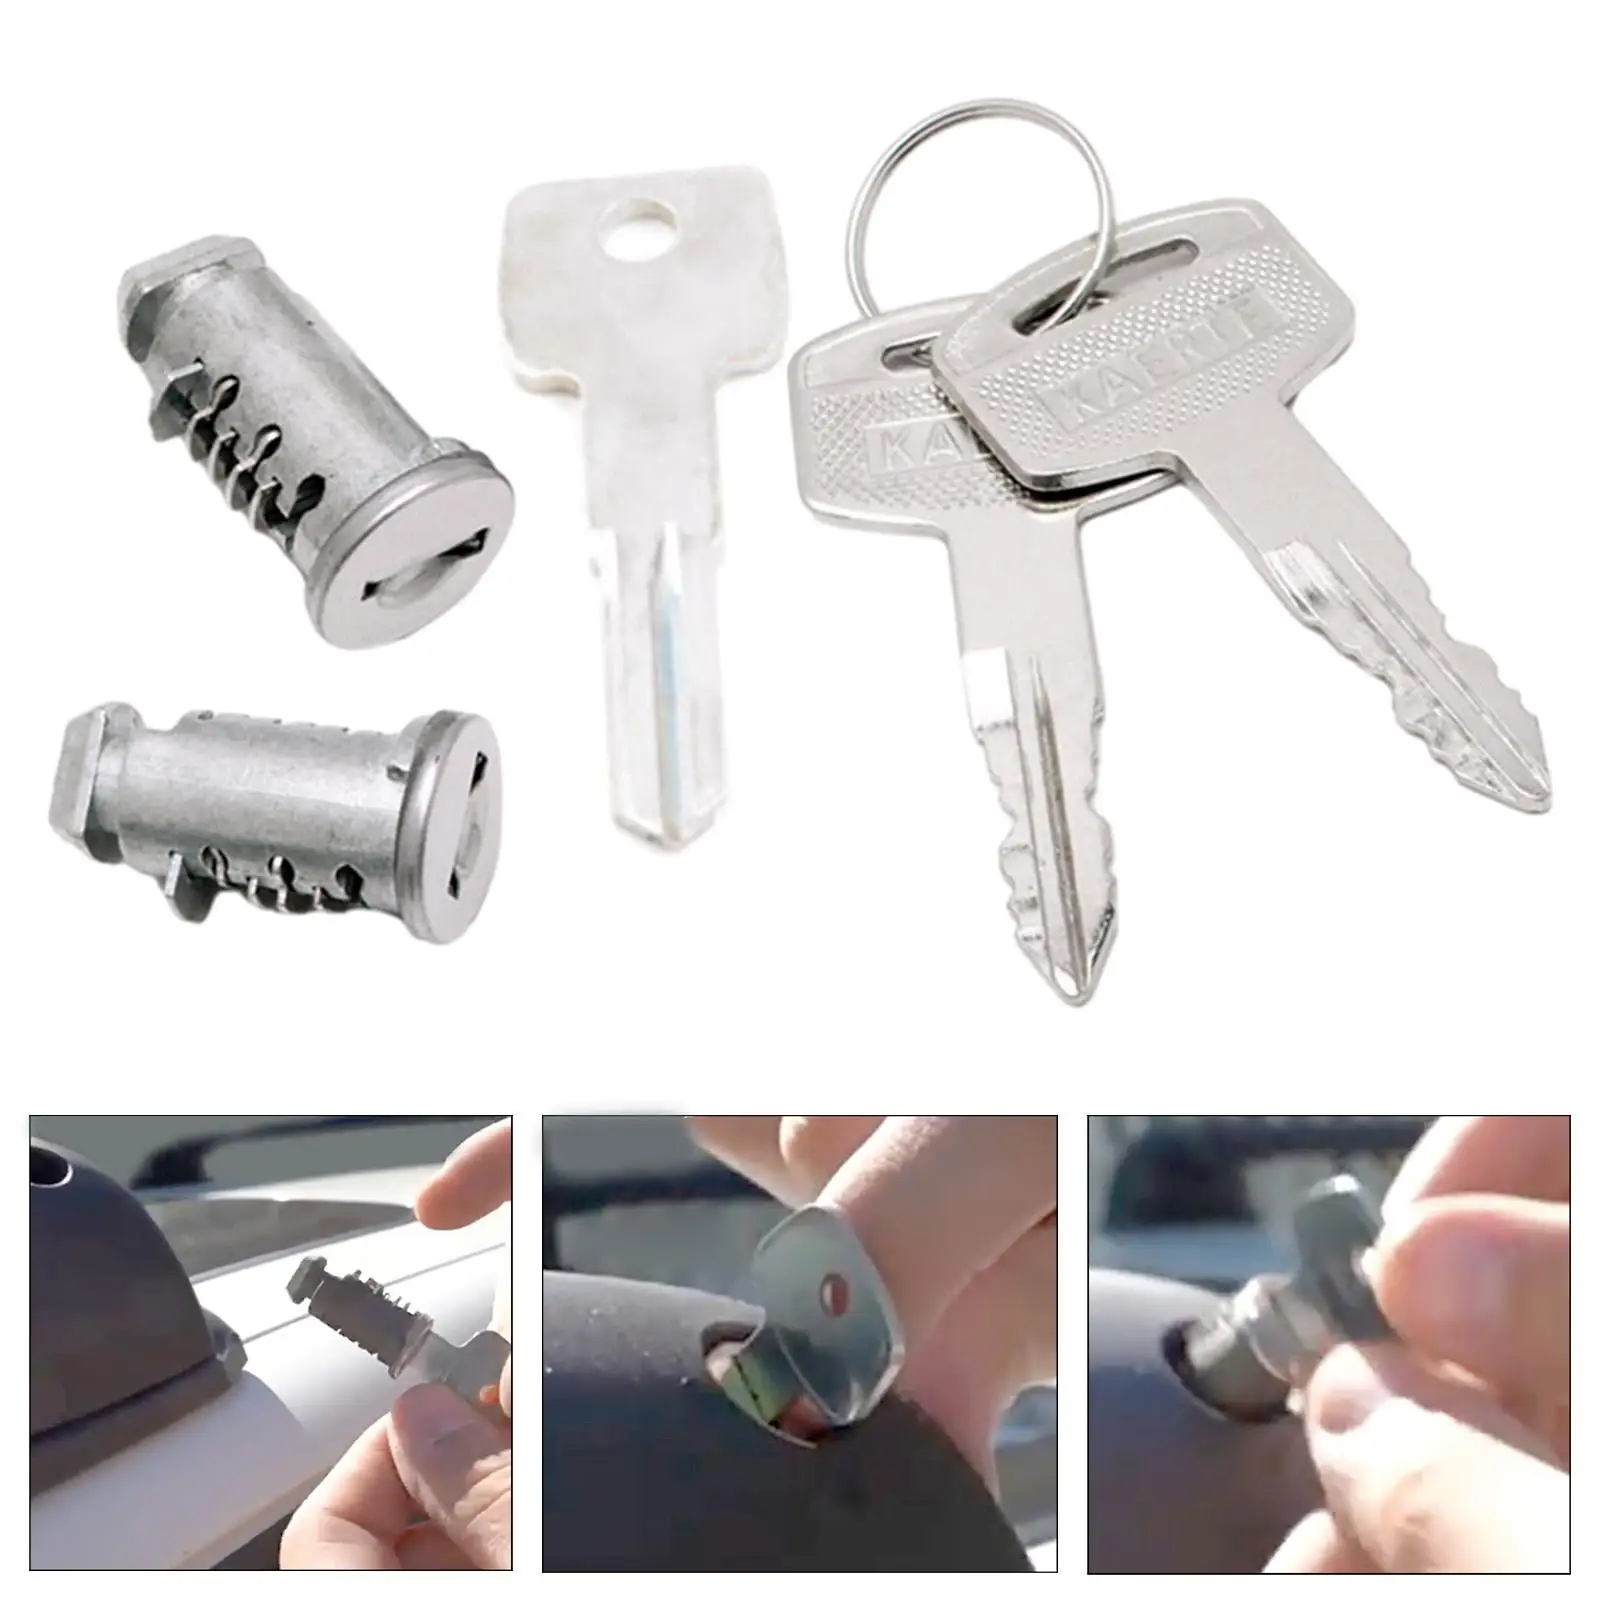 2 Pieces Lock Cylindes Cargo Bar Lock with Key for SUV Car Rack Locks